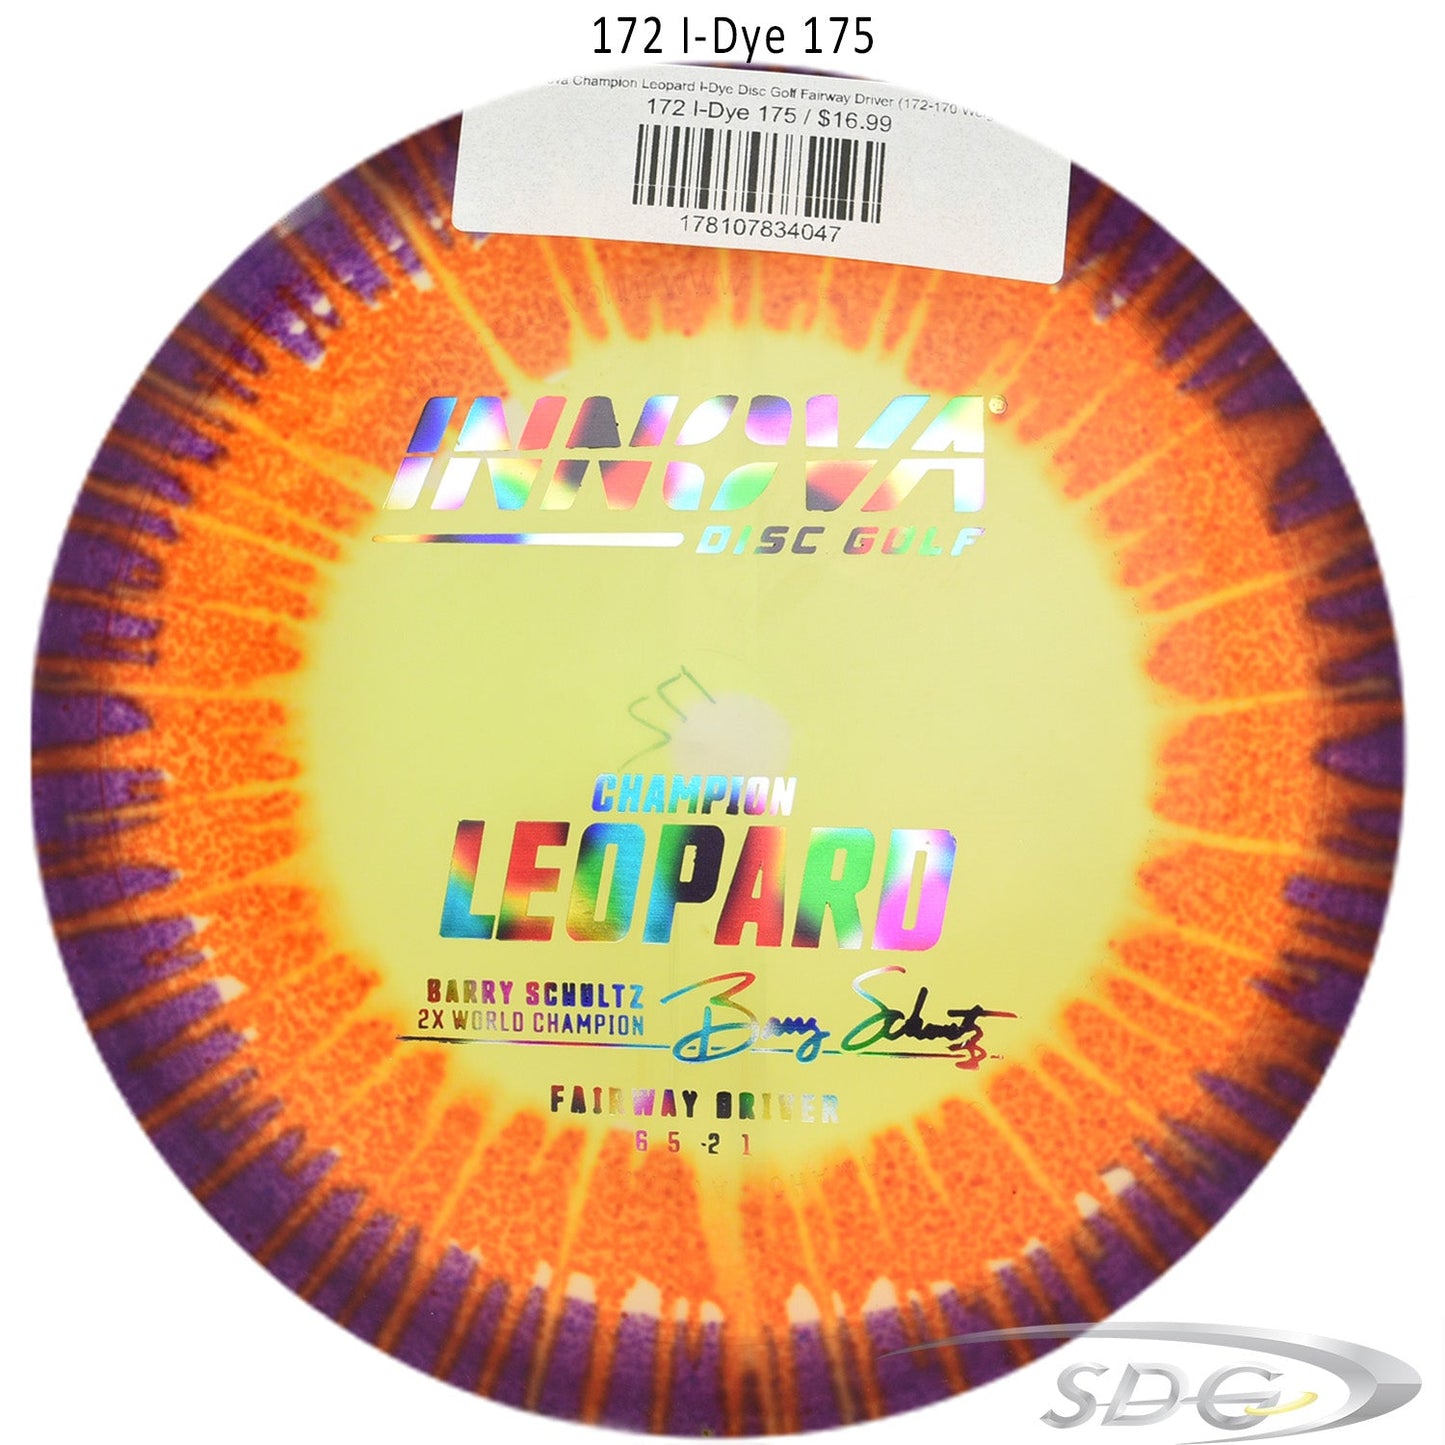 innova-champion-leopard-i-dye-disc-golf-fairway-driver 172 I-Dye 175 